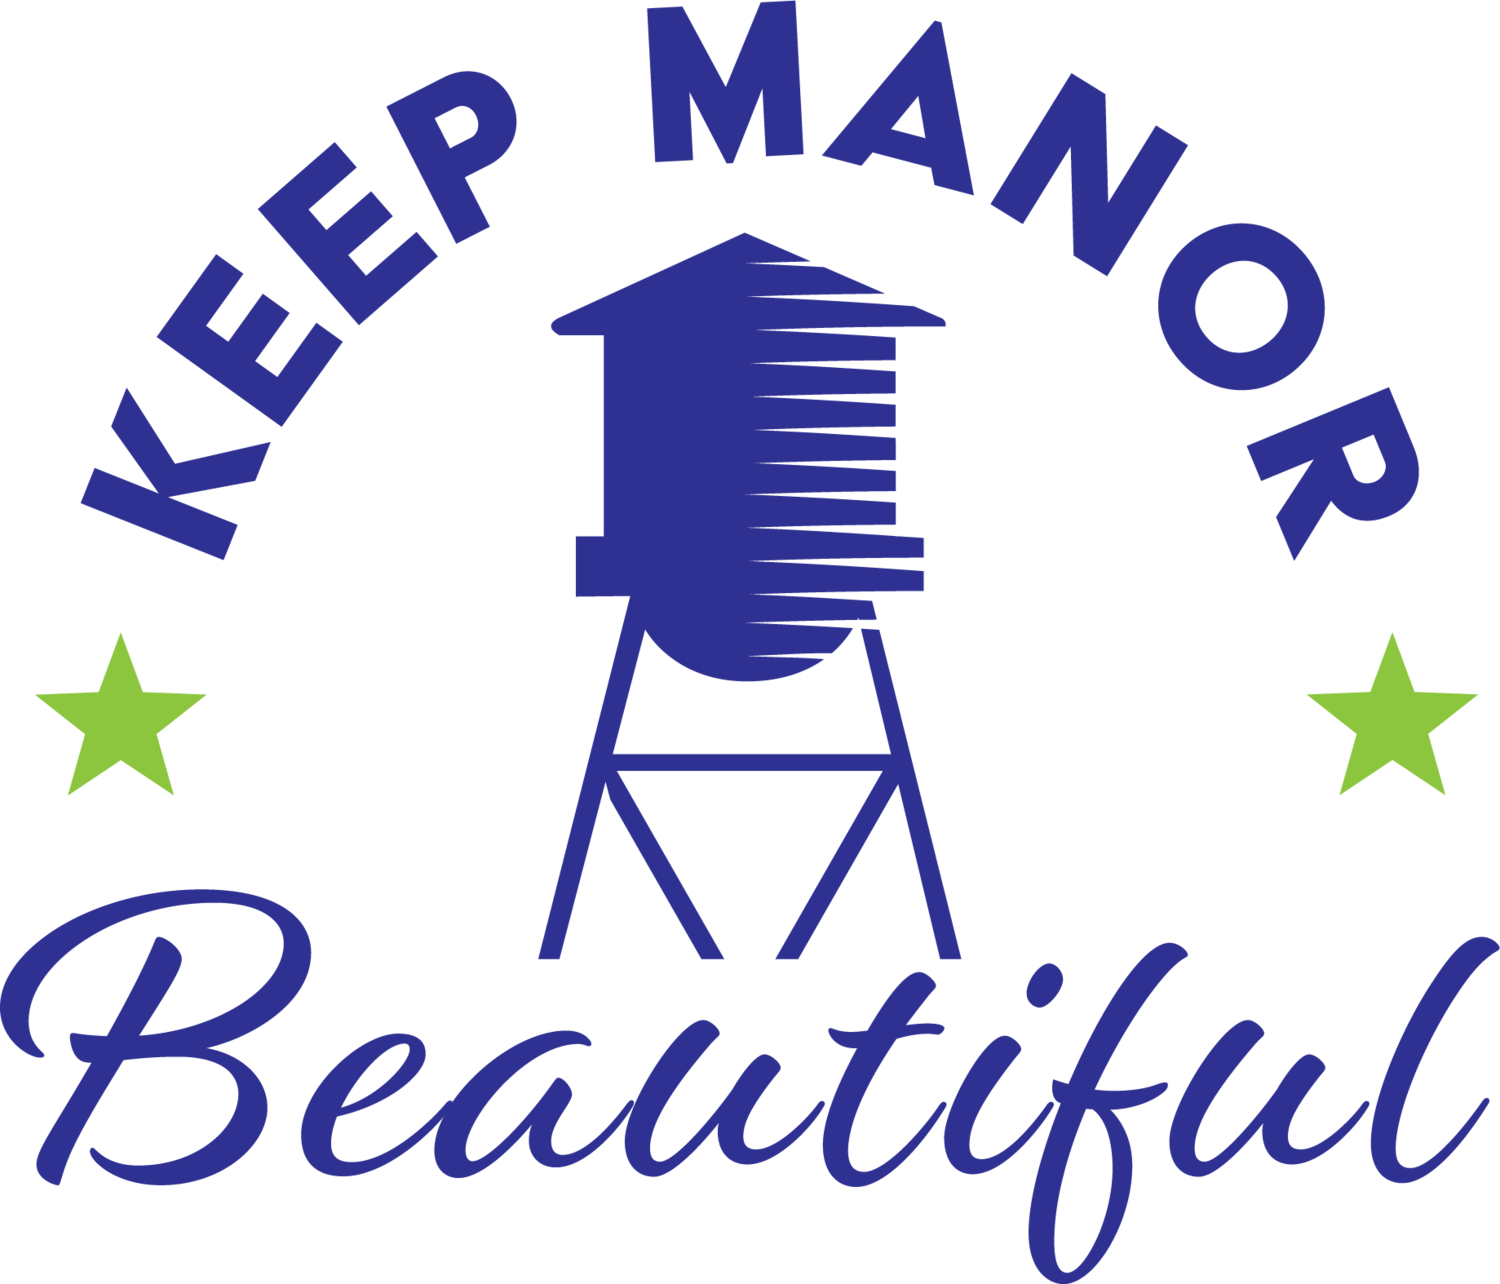 Keep Manor Beautiful